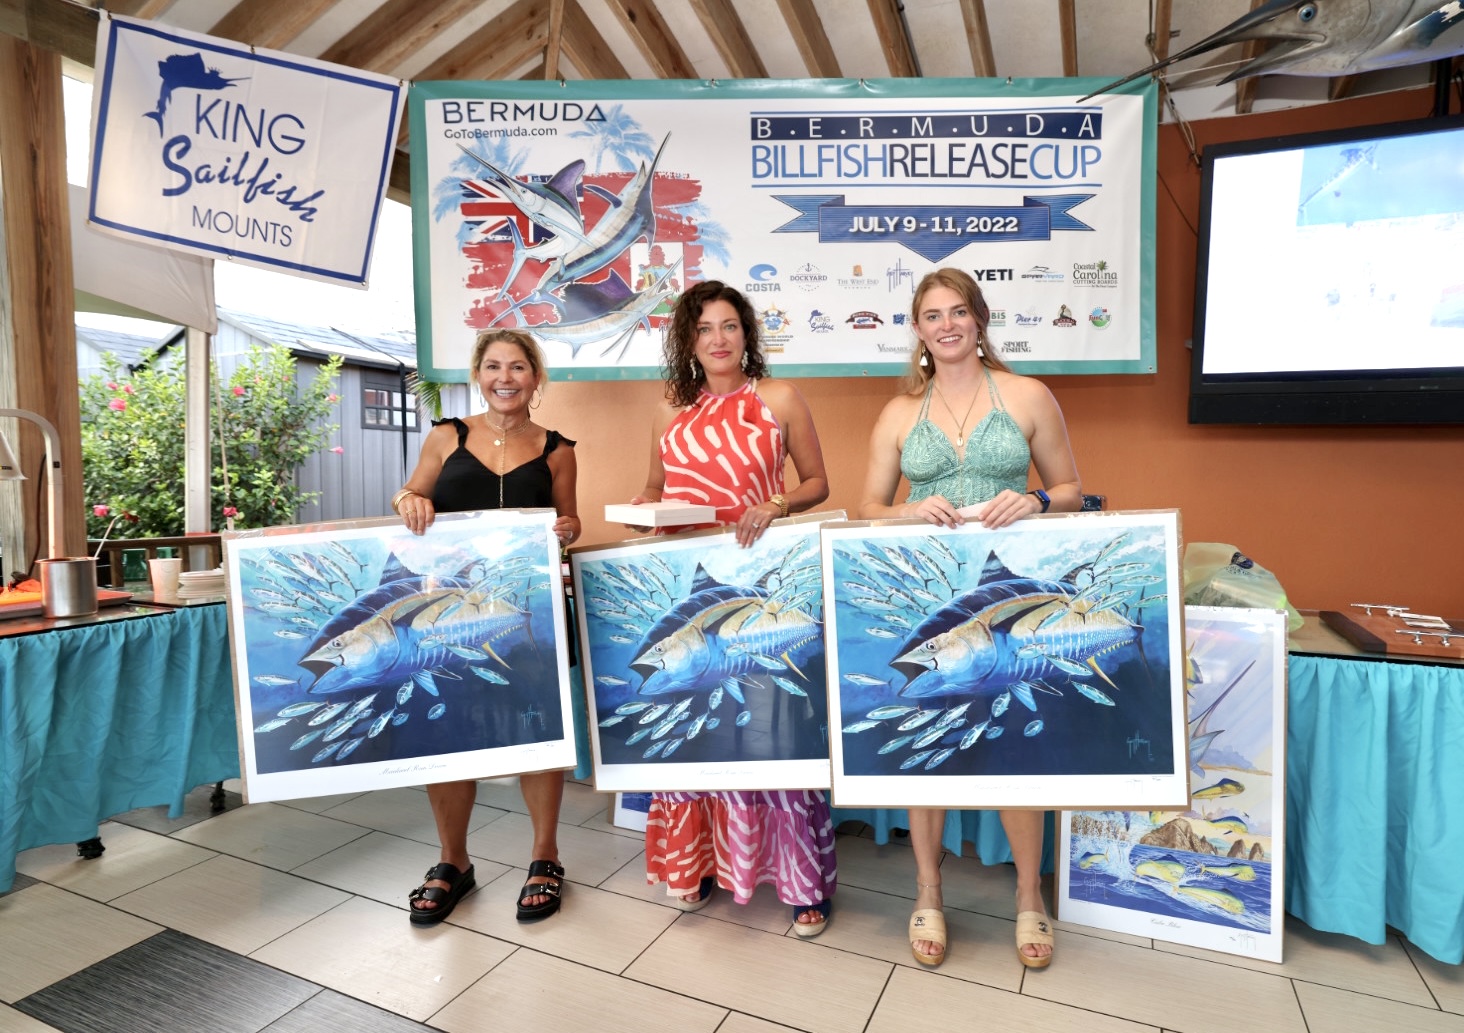 2022 Bermuda Billfish Release Cup Photo Gallery